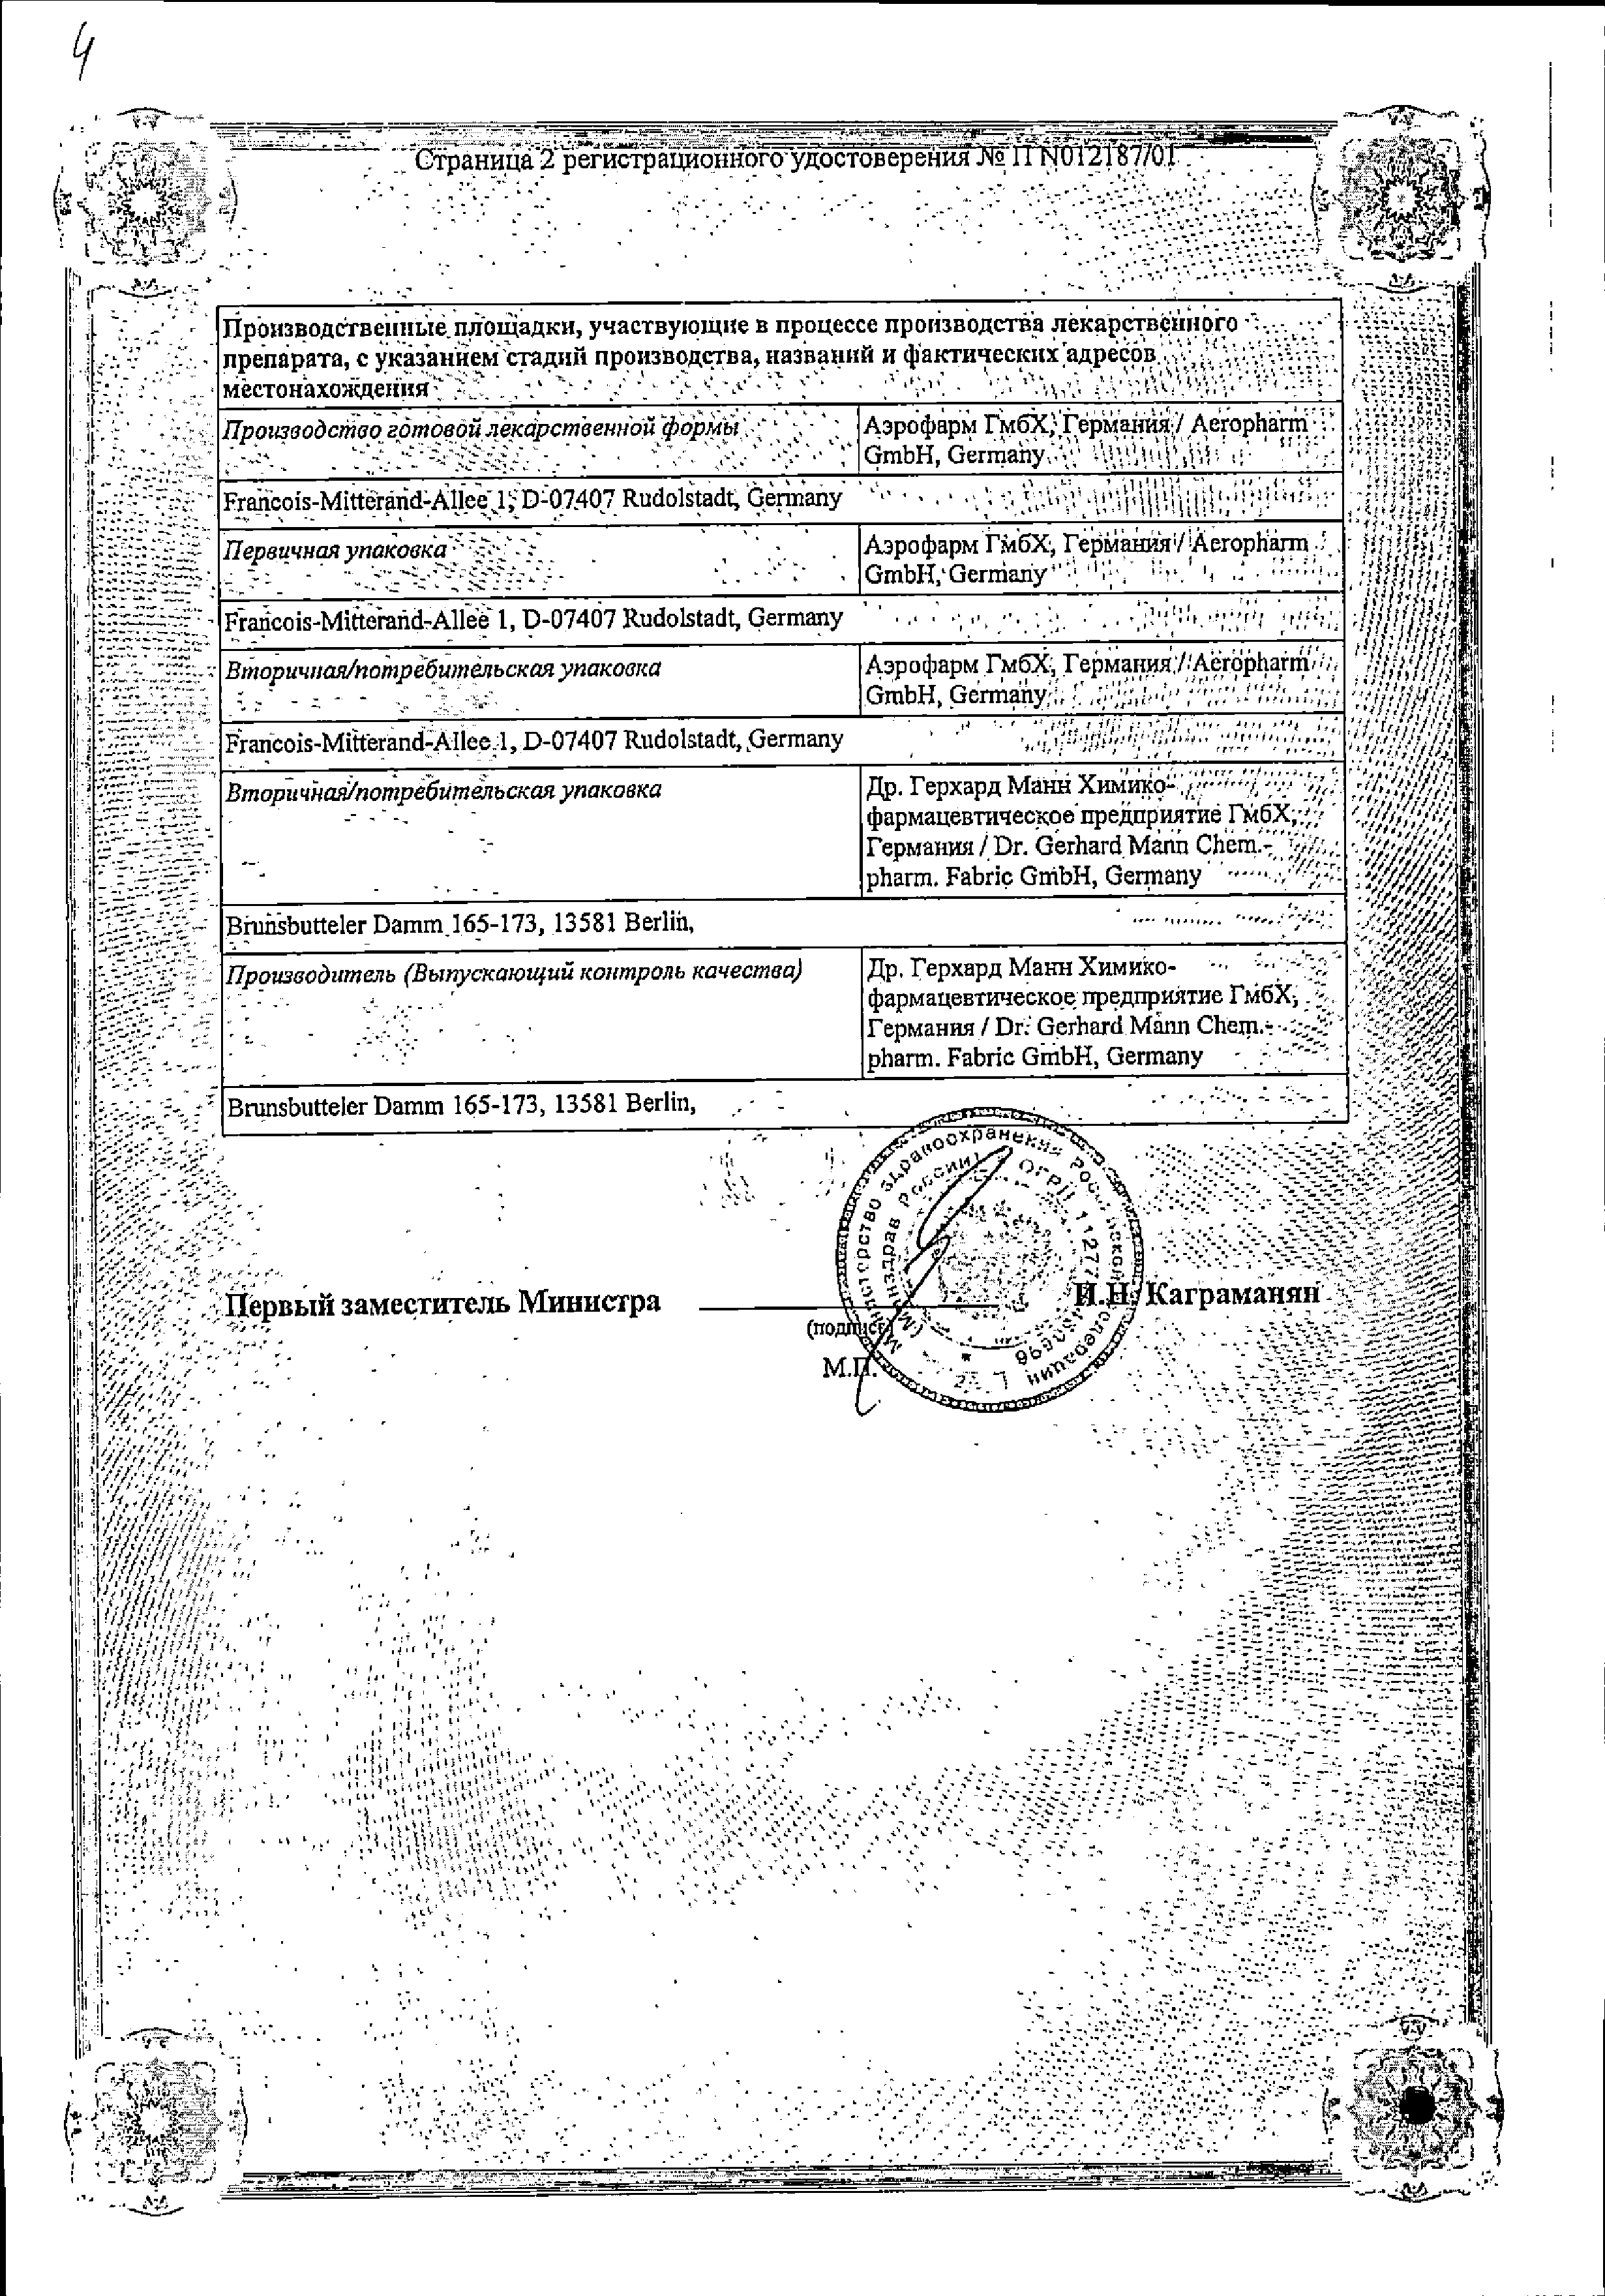 Пантенолспрей сертификат